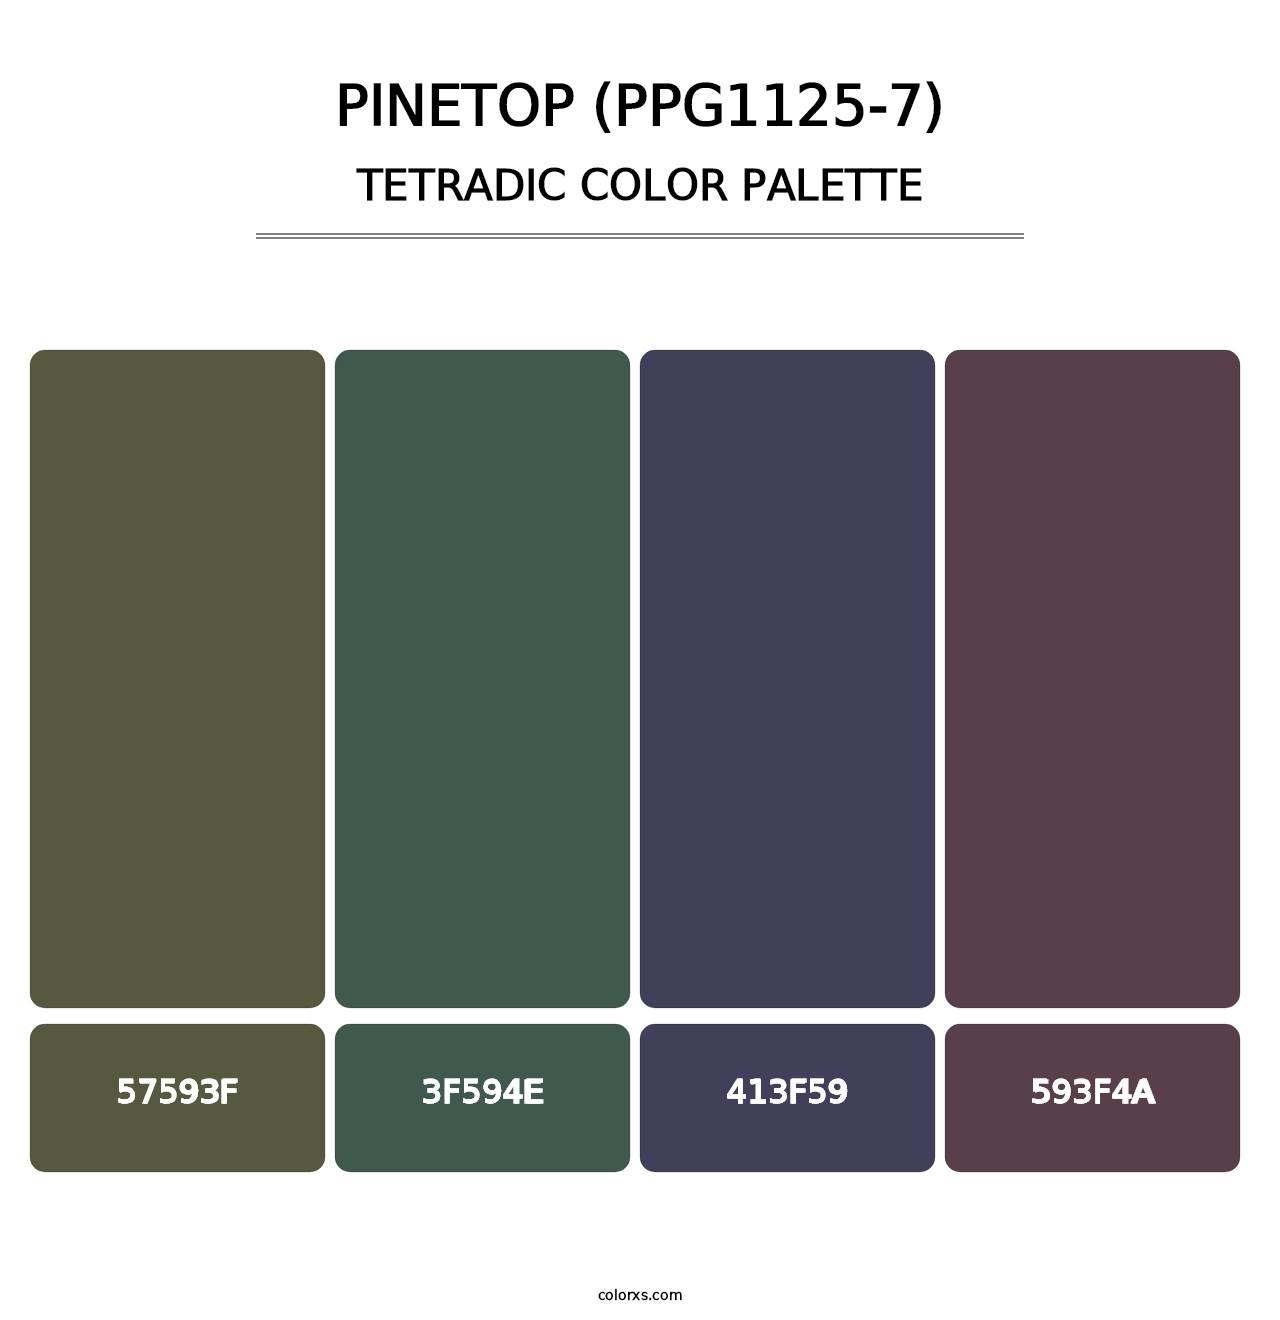 Pinetop (PPG1125-7) - Tetradic Color Palette